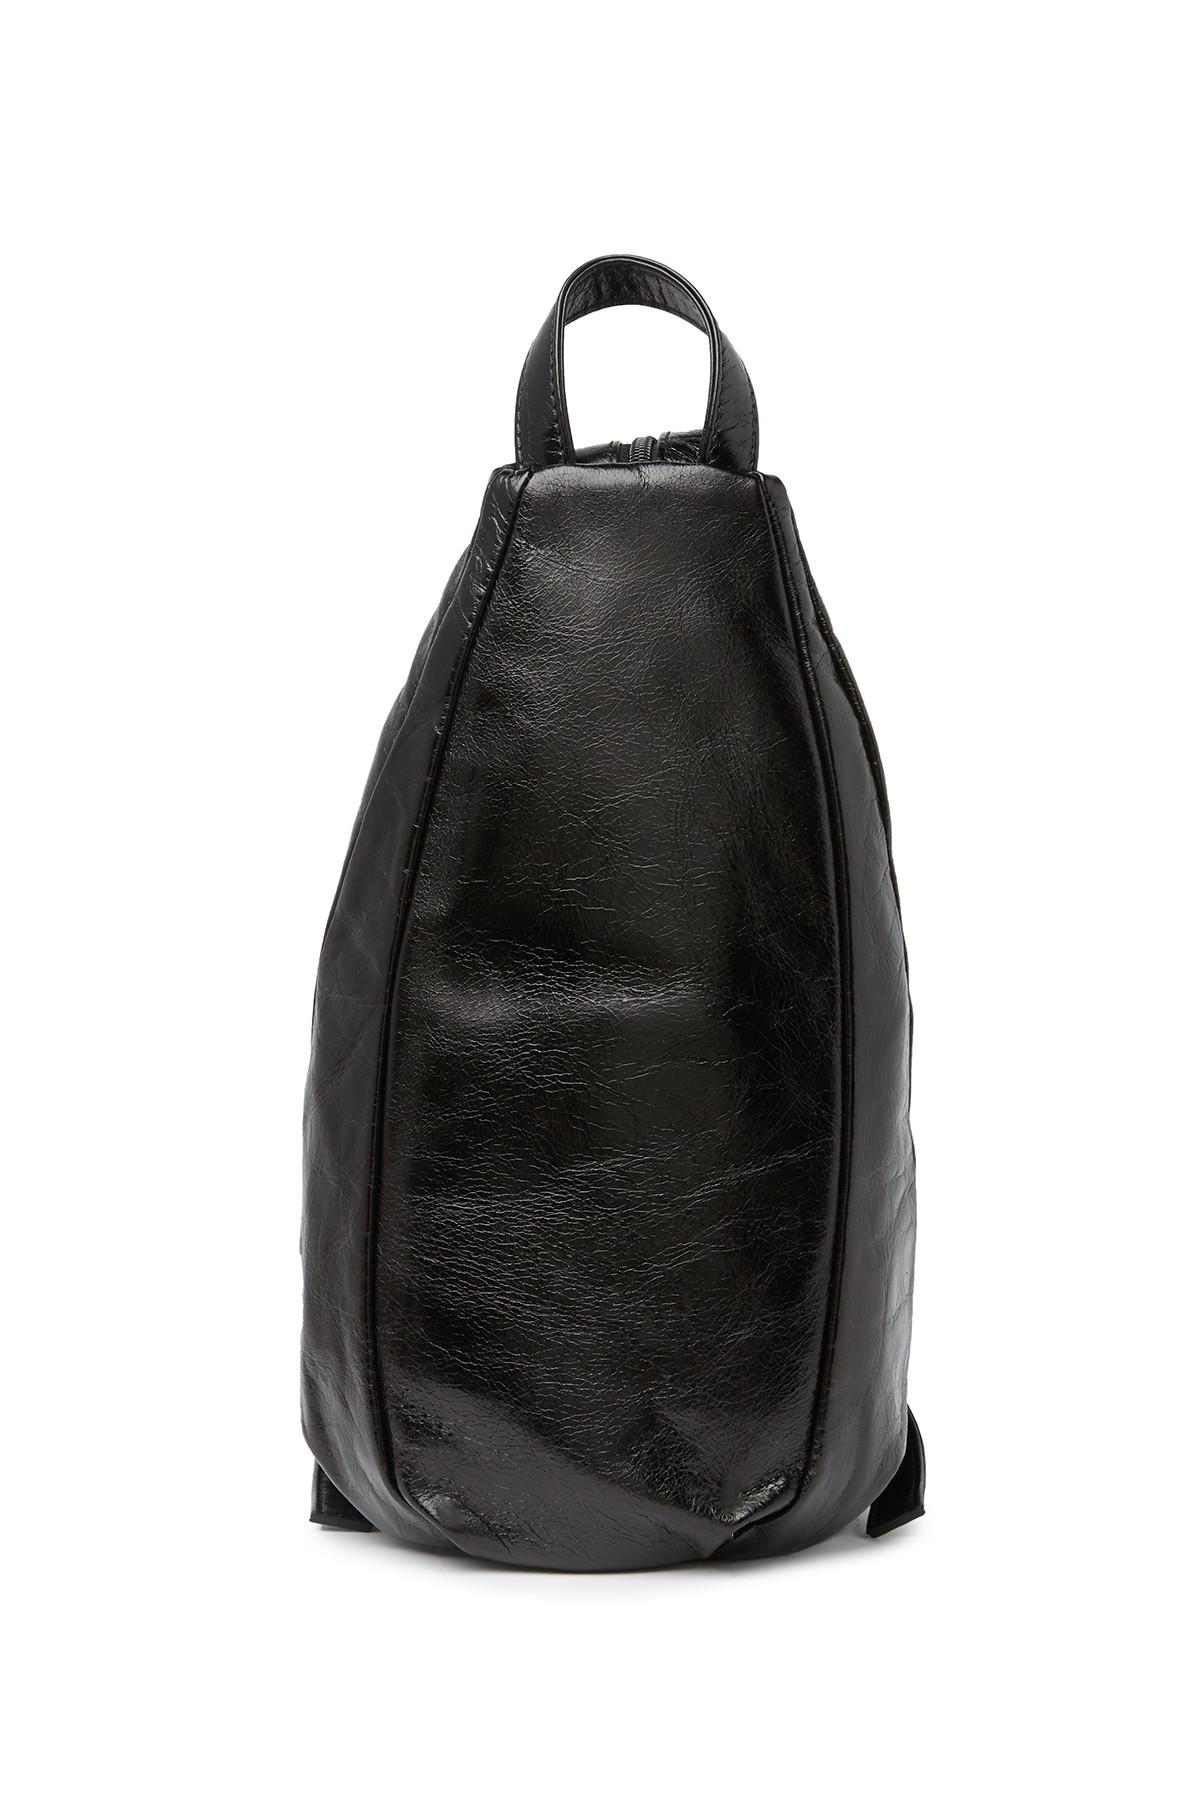 Hobo Kiley Leather Backpack in Black - Lyst